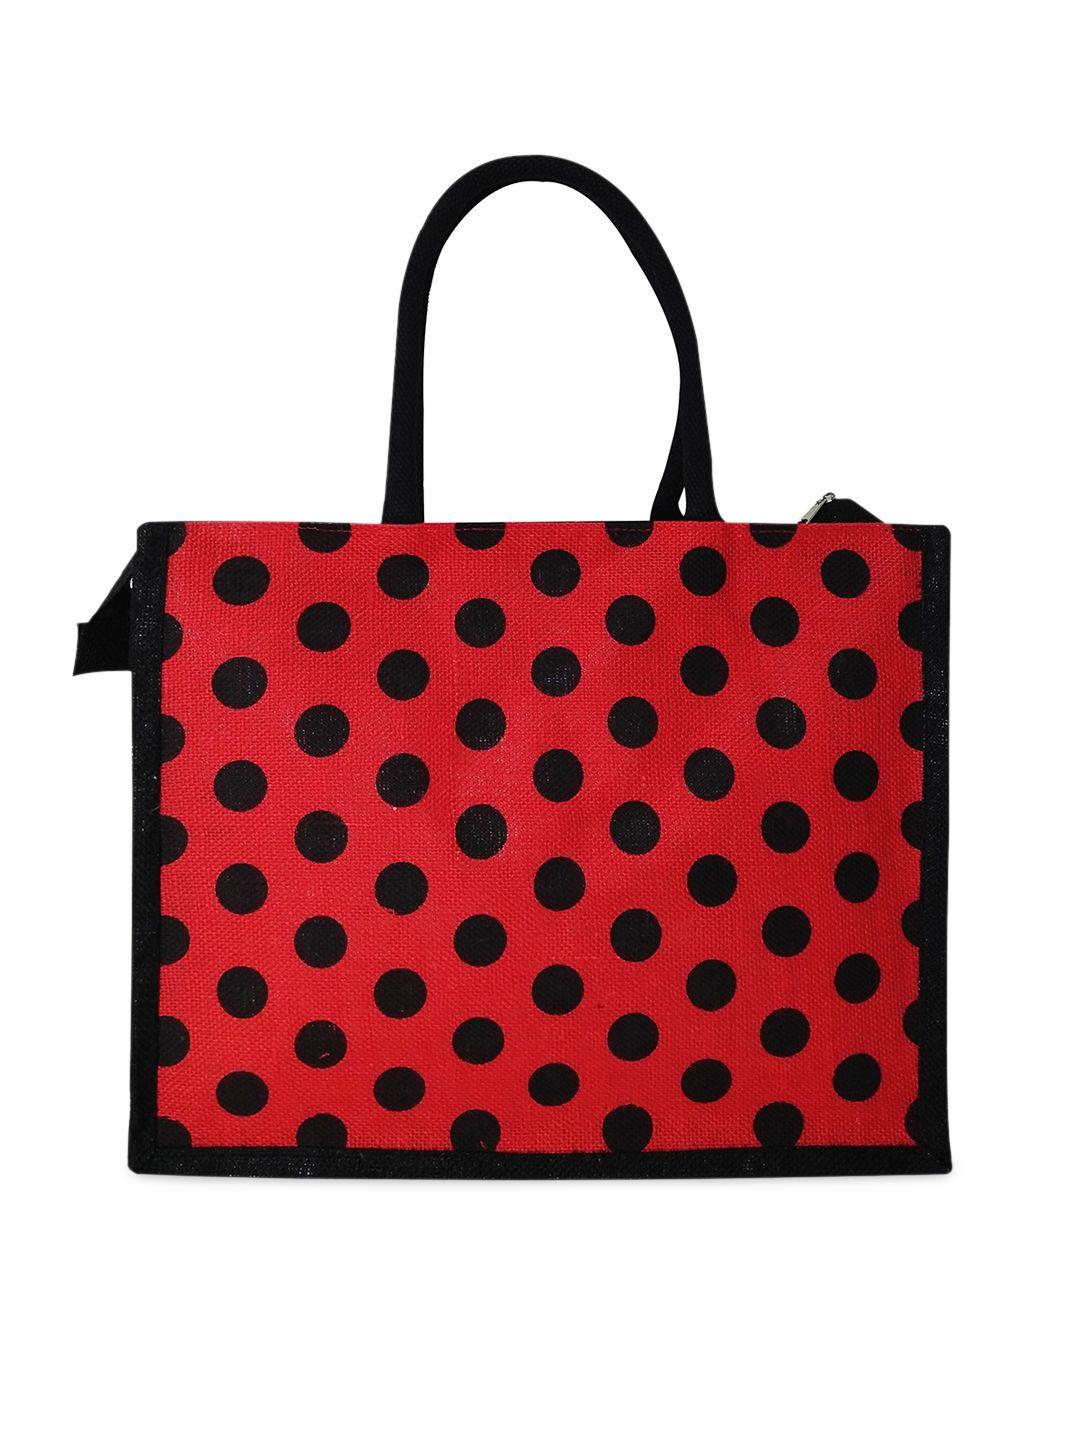 earthbags red geometric printed shopper tote bag